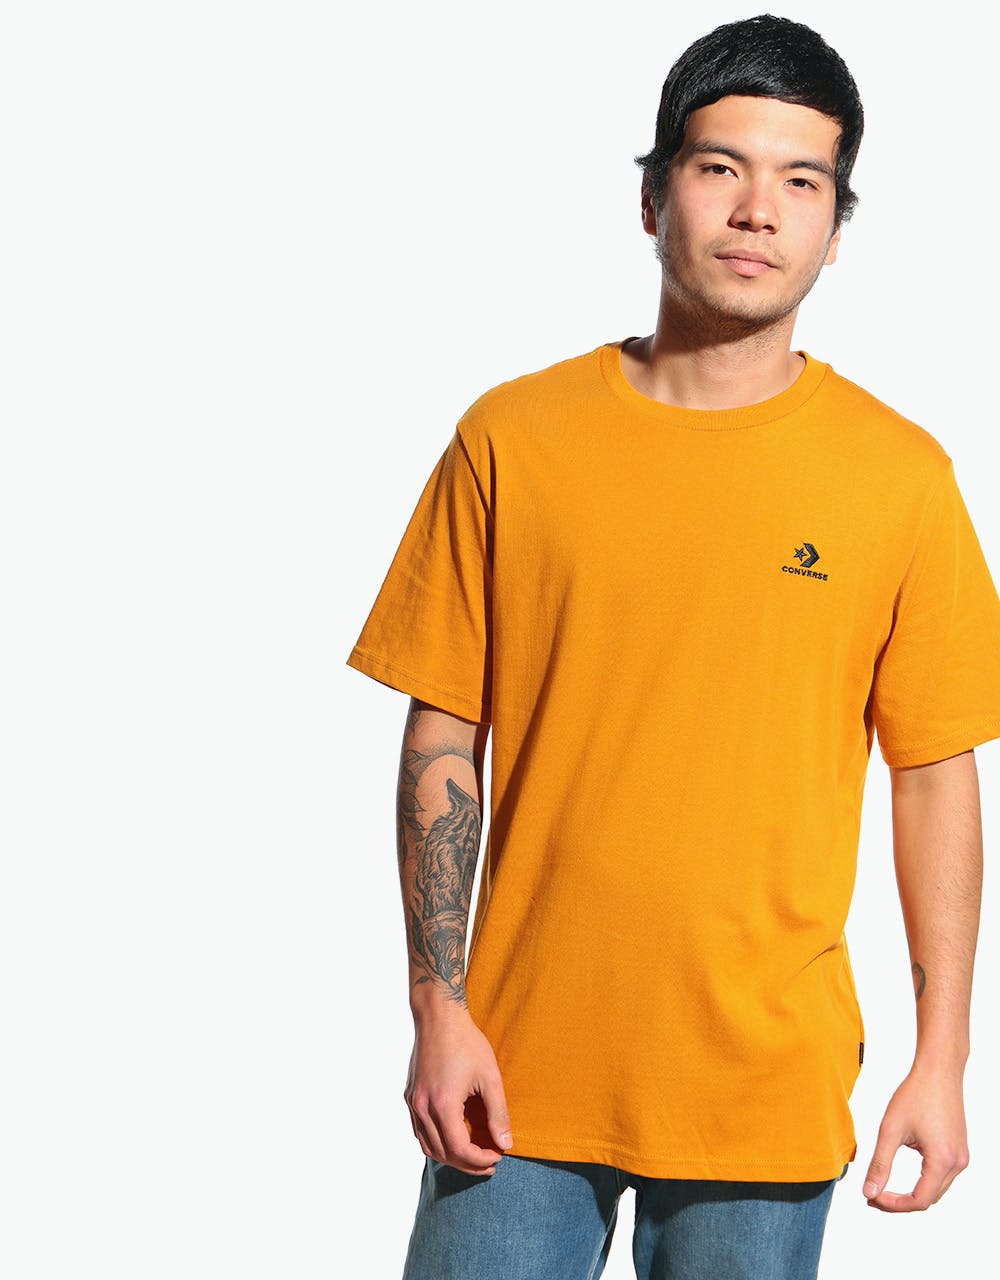 Converse Embroidered Star Chevron Left Chest T-Shirt - Saffron Yellow